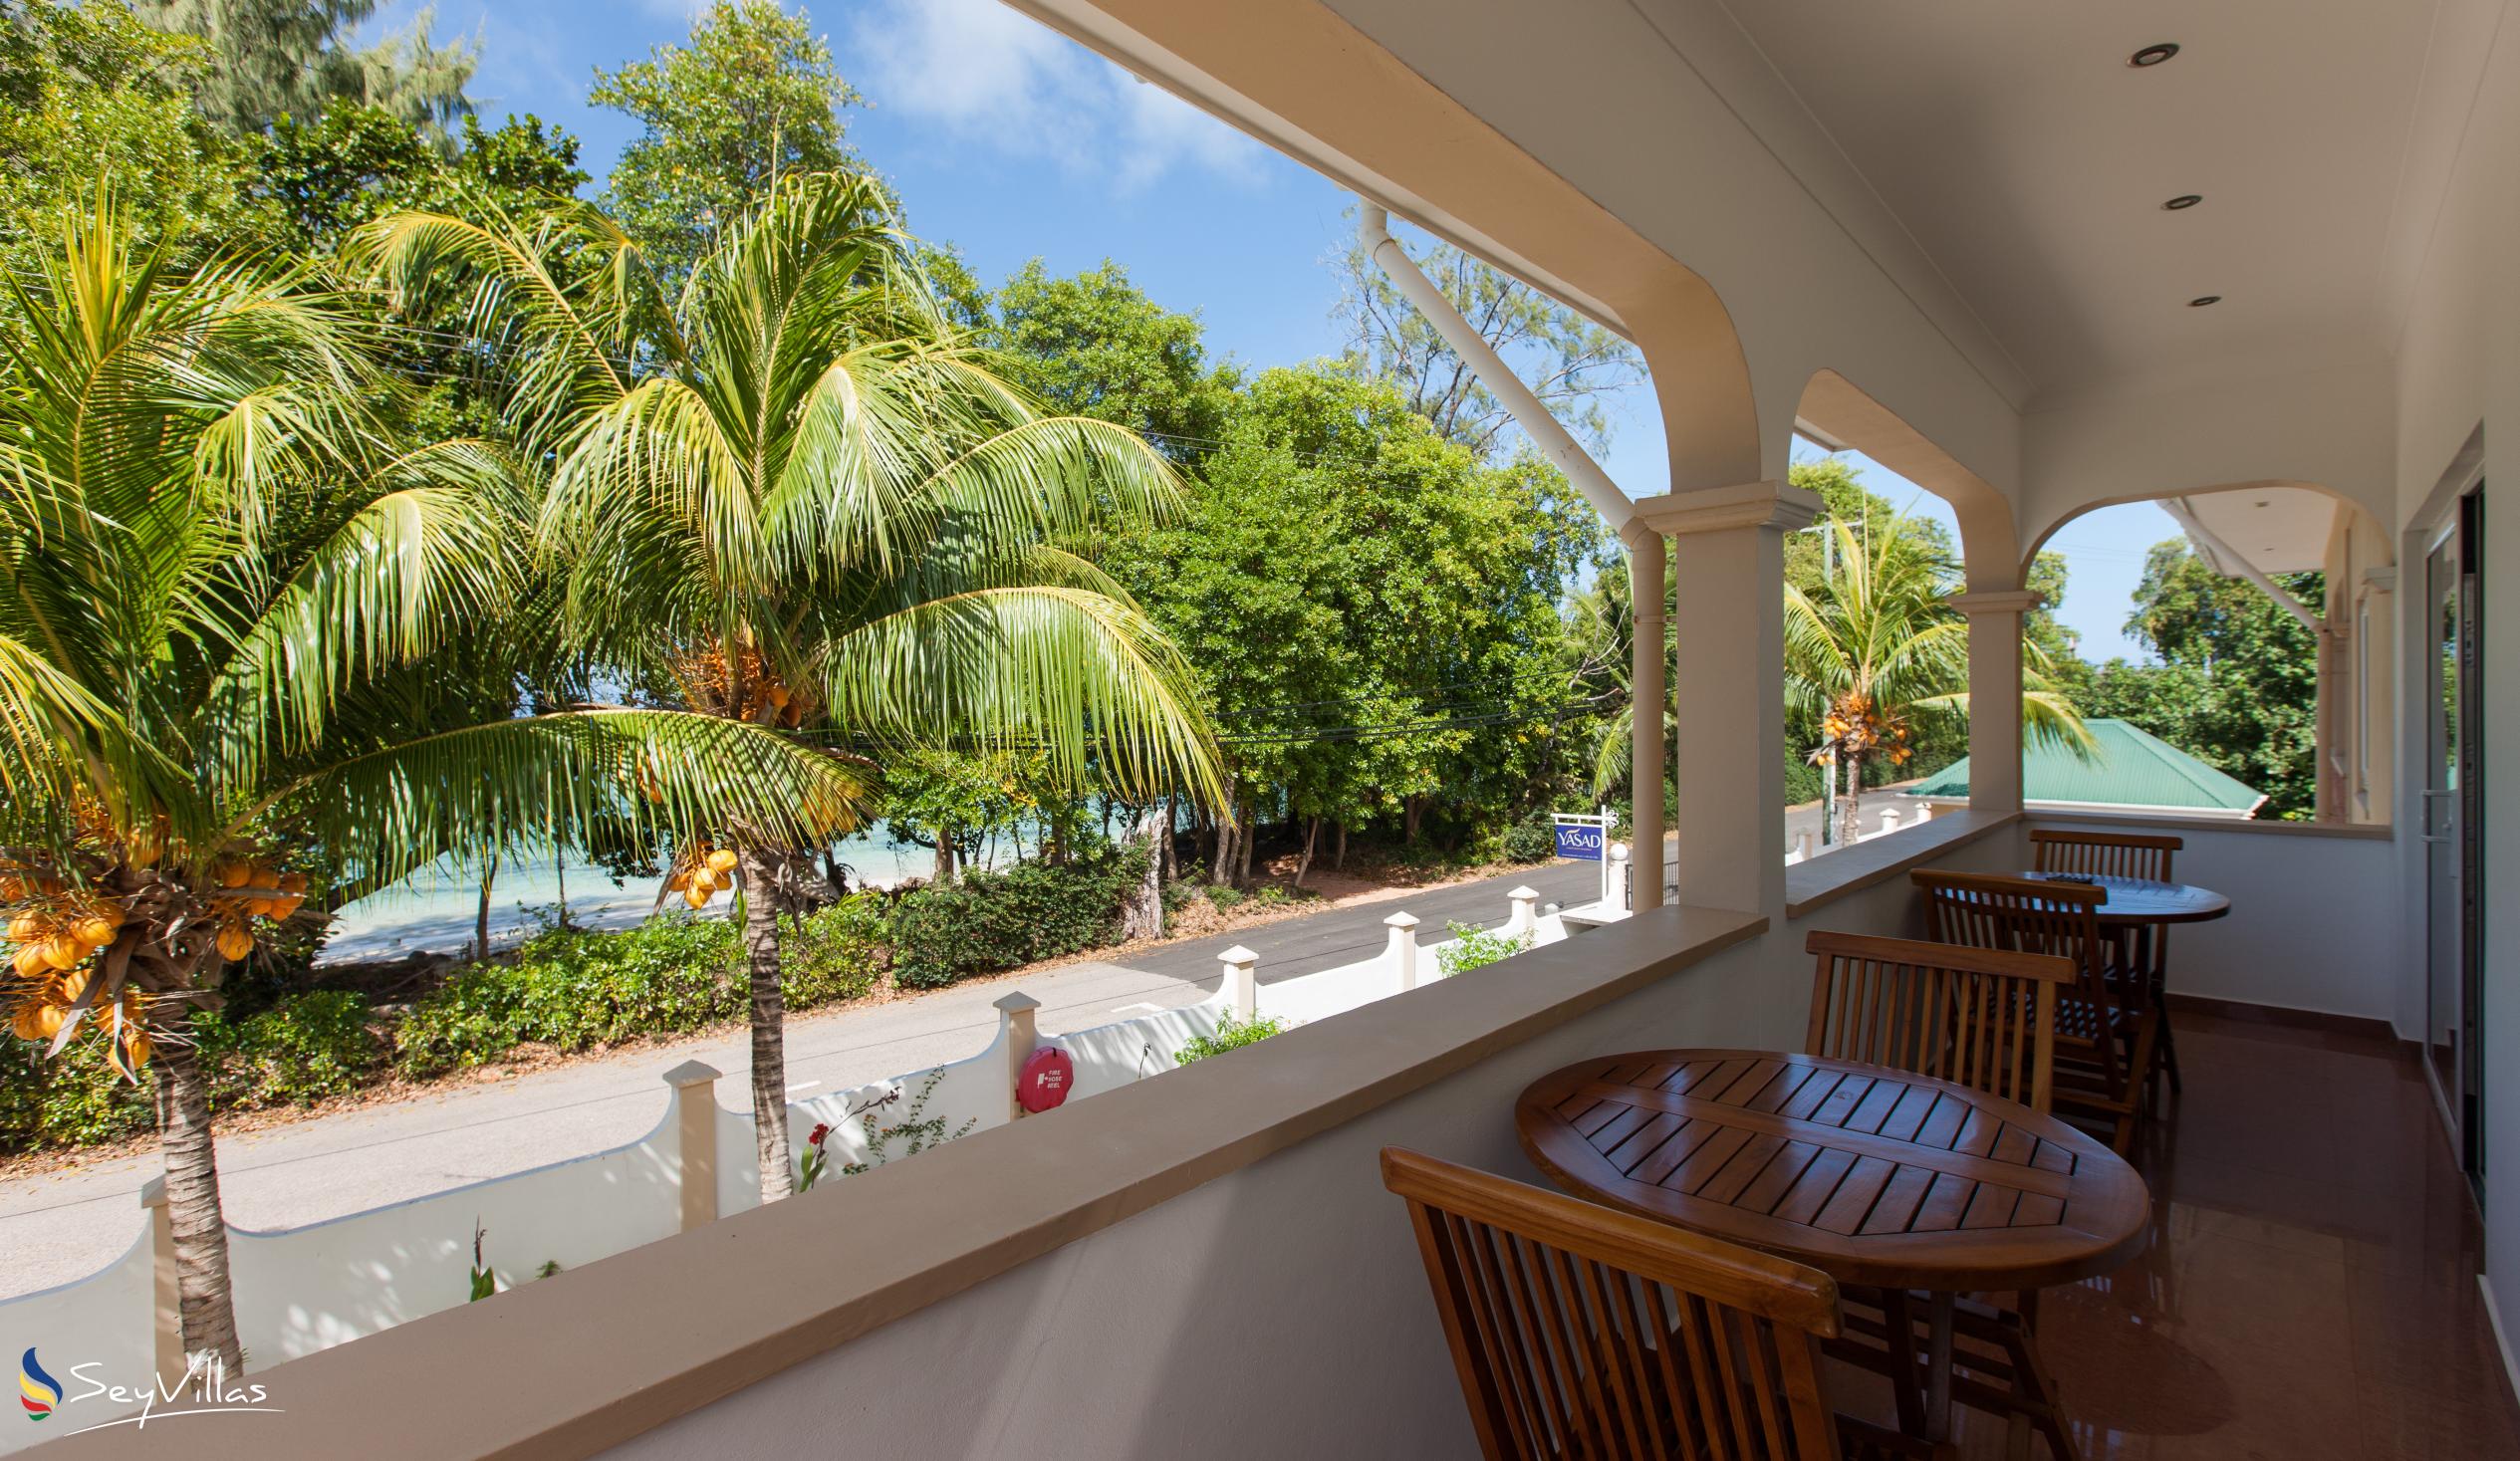 Photo 93: YASAD Luxury Beach Residence - 3-Bedroom Apartment First Floor - Praslin (Seychelles)